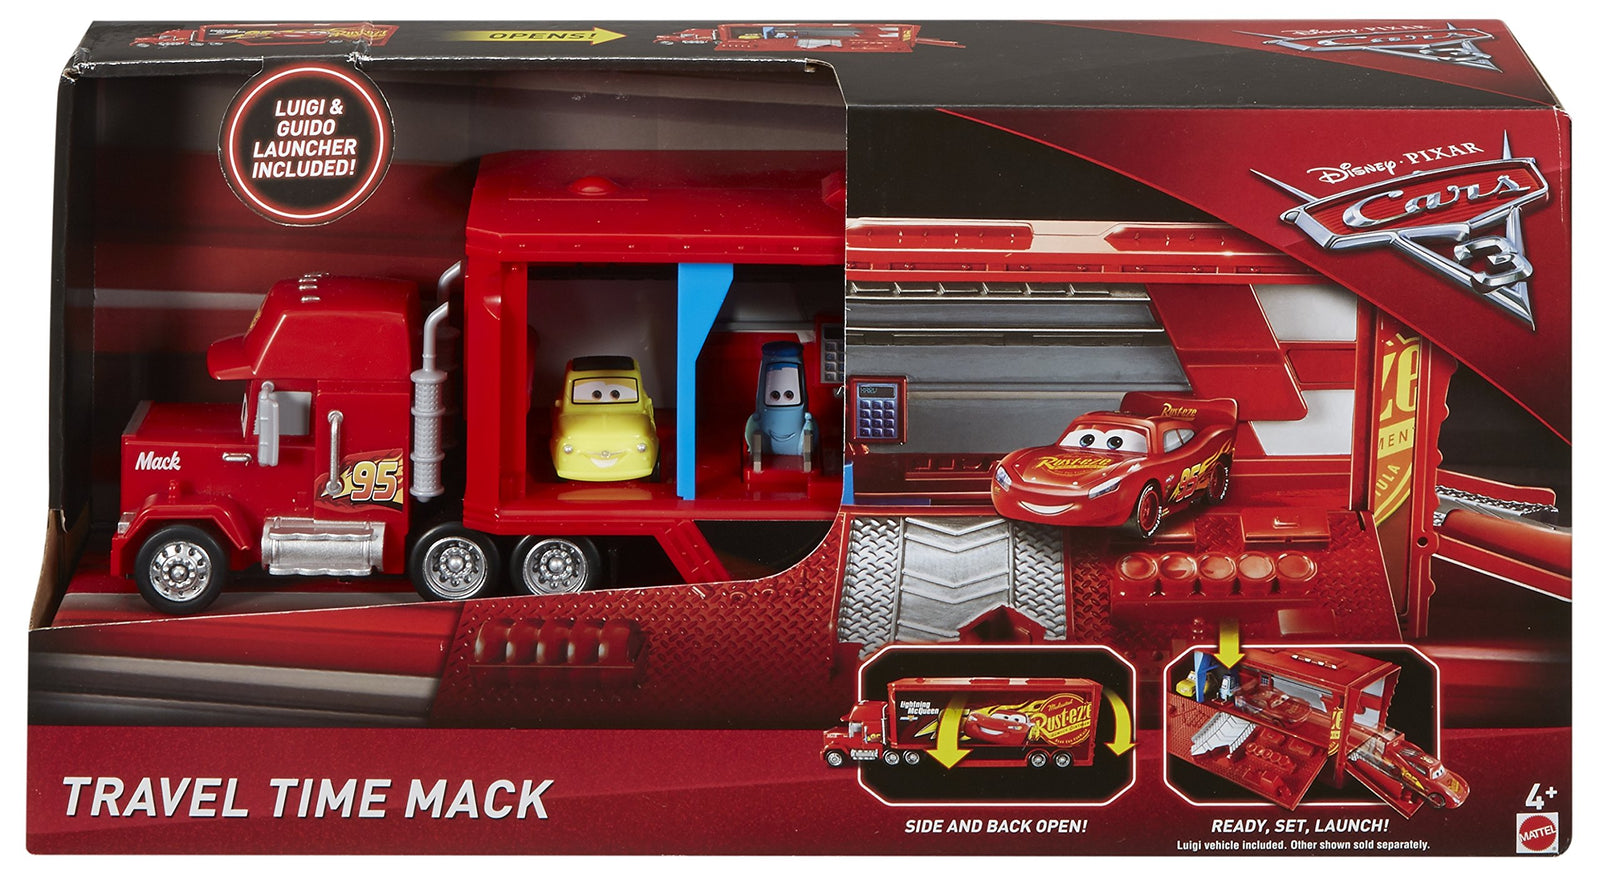 Disney Pixar Cars 3 Travel Time Mack Playset [Amazon Exclusive]